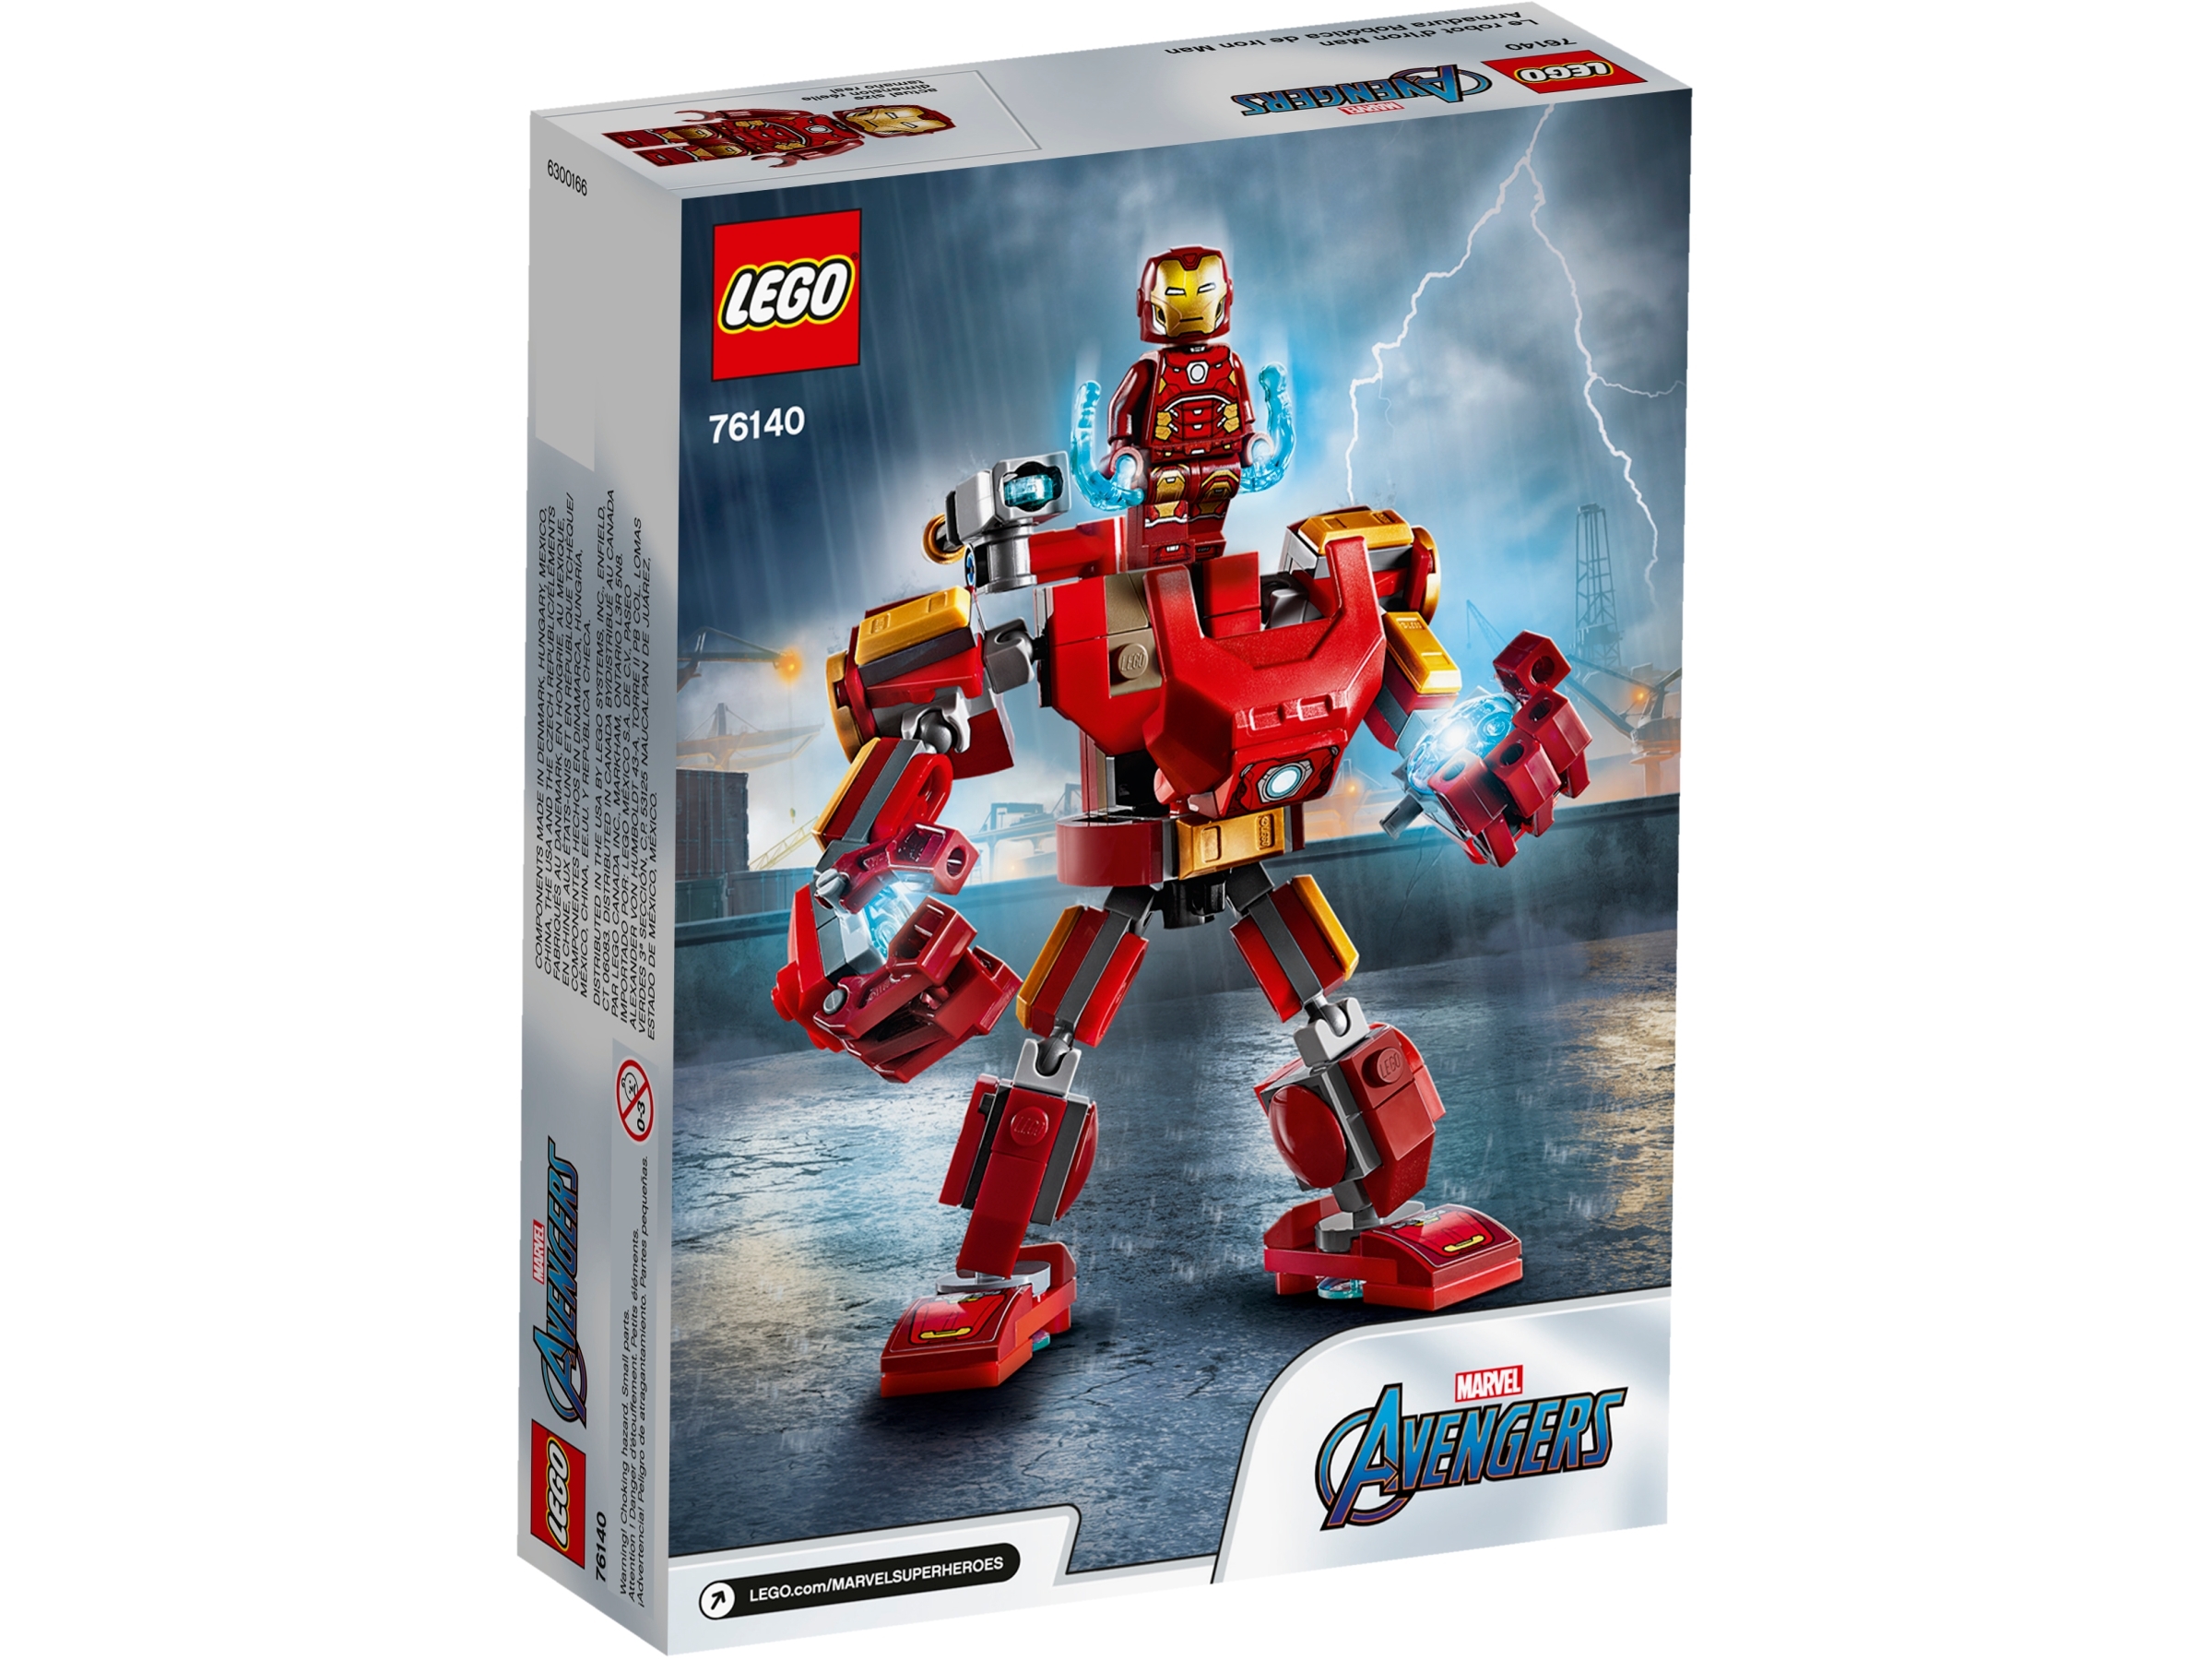 Lego Marvel 76140  Iron Man Mech Neu es fehlt der OVP Karton sonst alles da